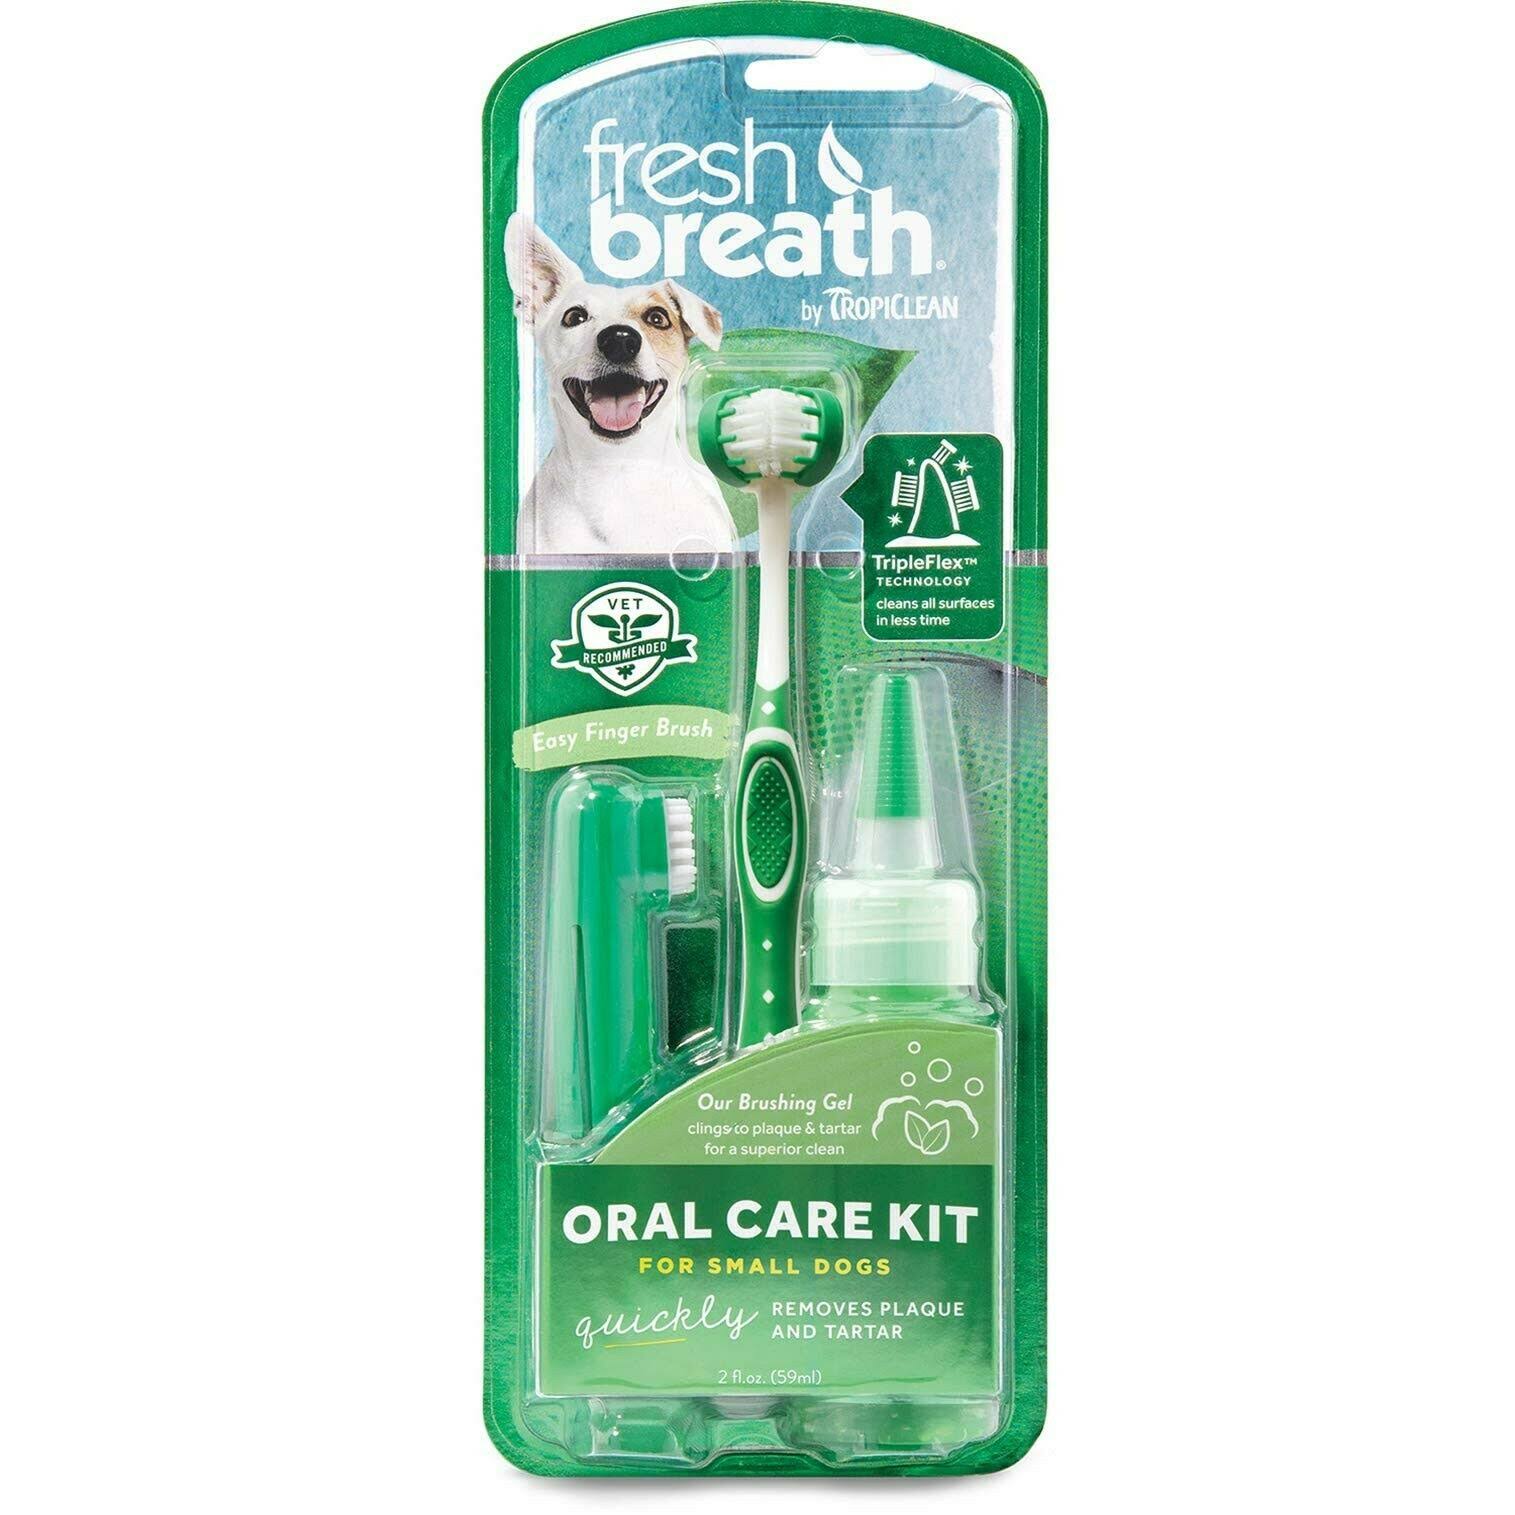 TropiClean Fresh Breath Oral Care Puppy Kit